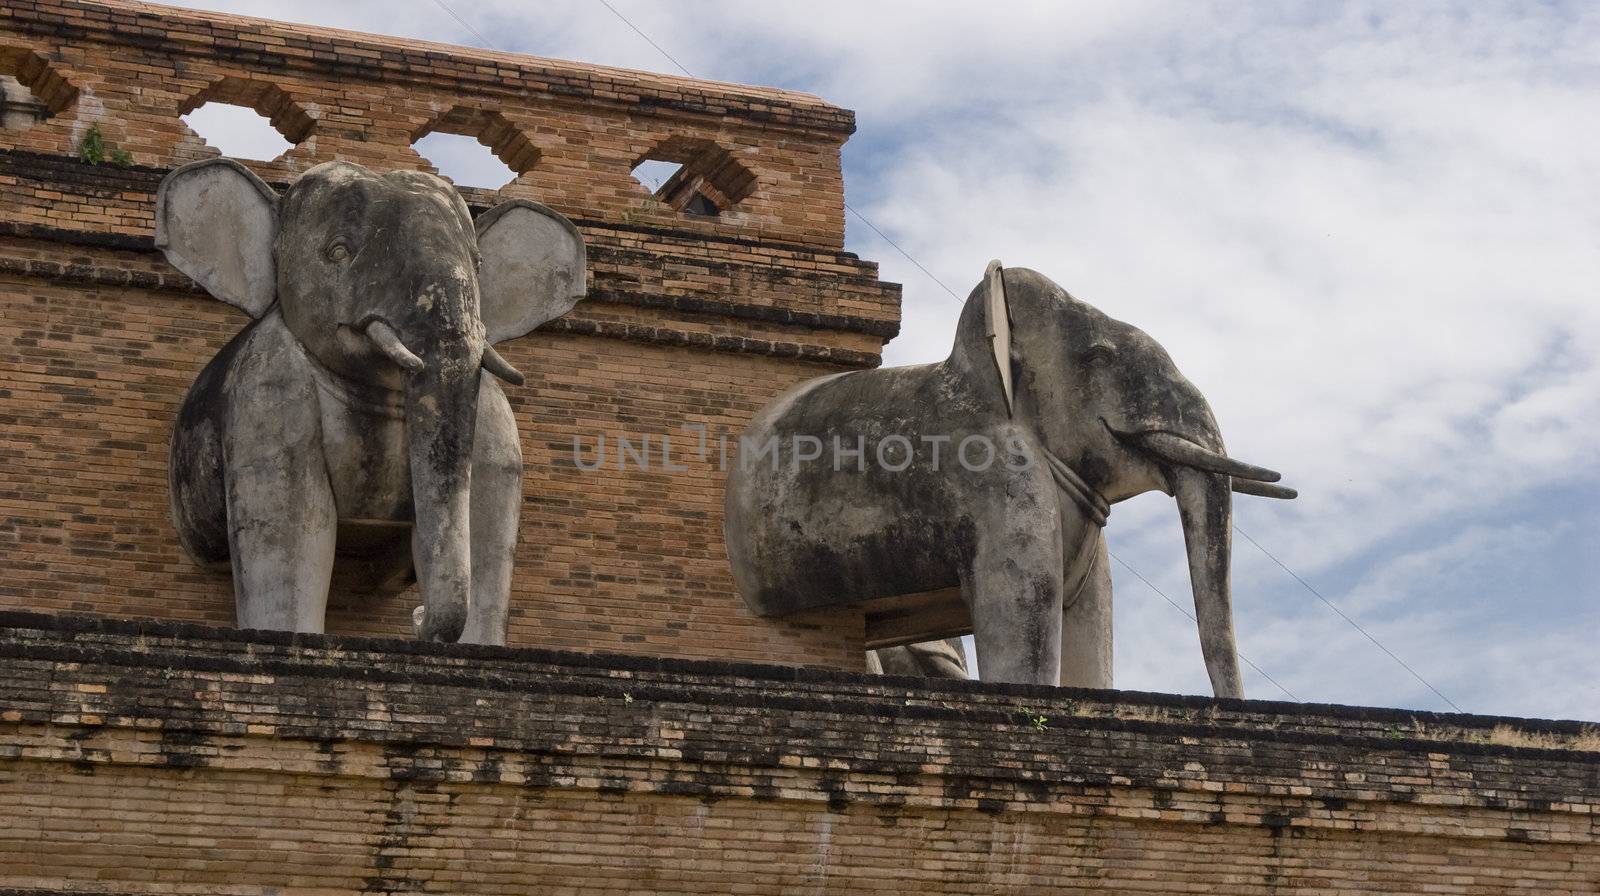 Temple elephants by cvail73